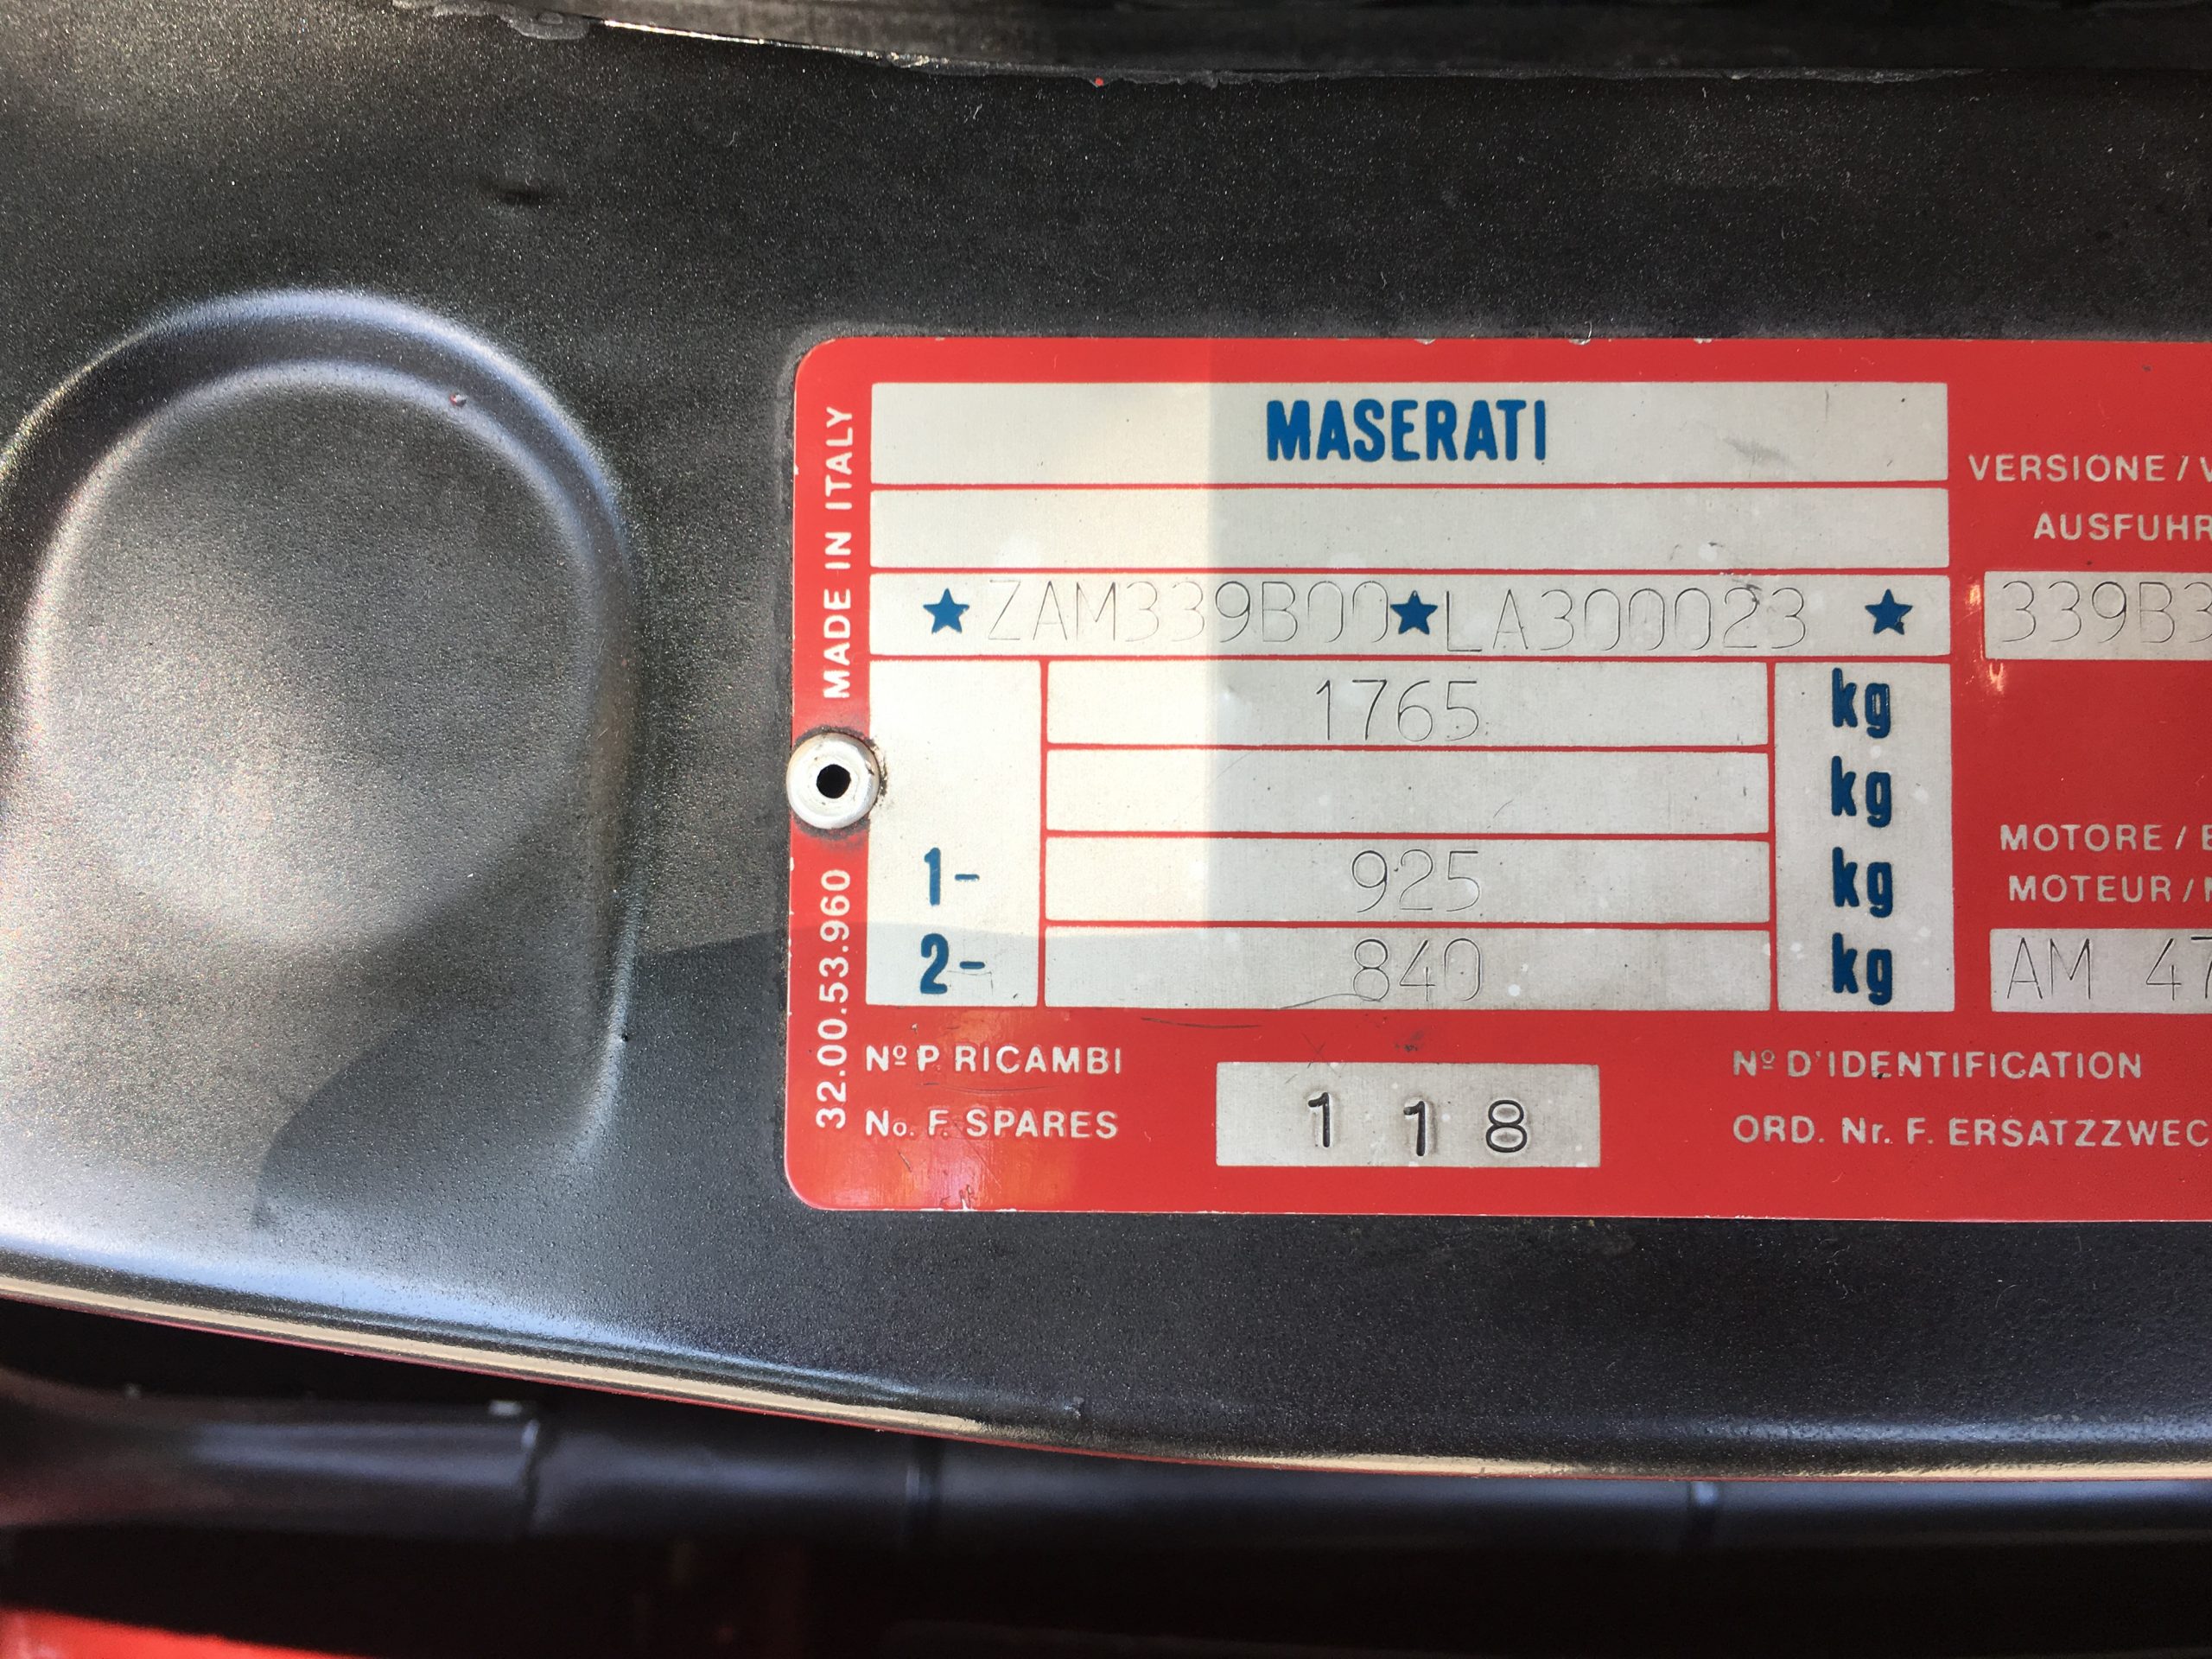 Maserati Shamal